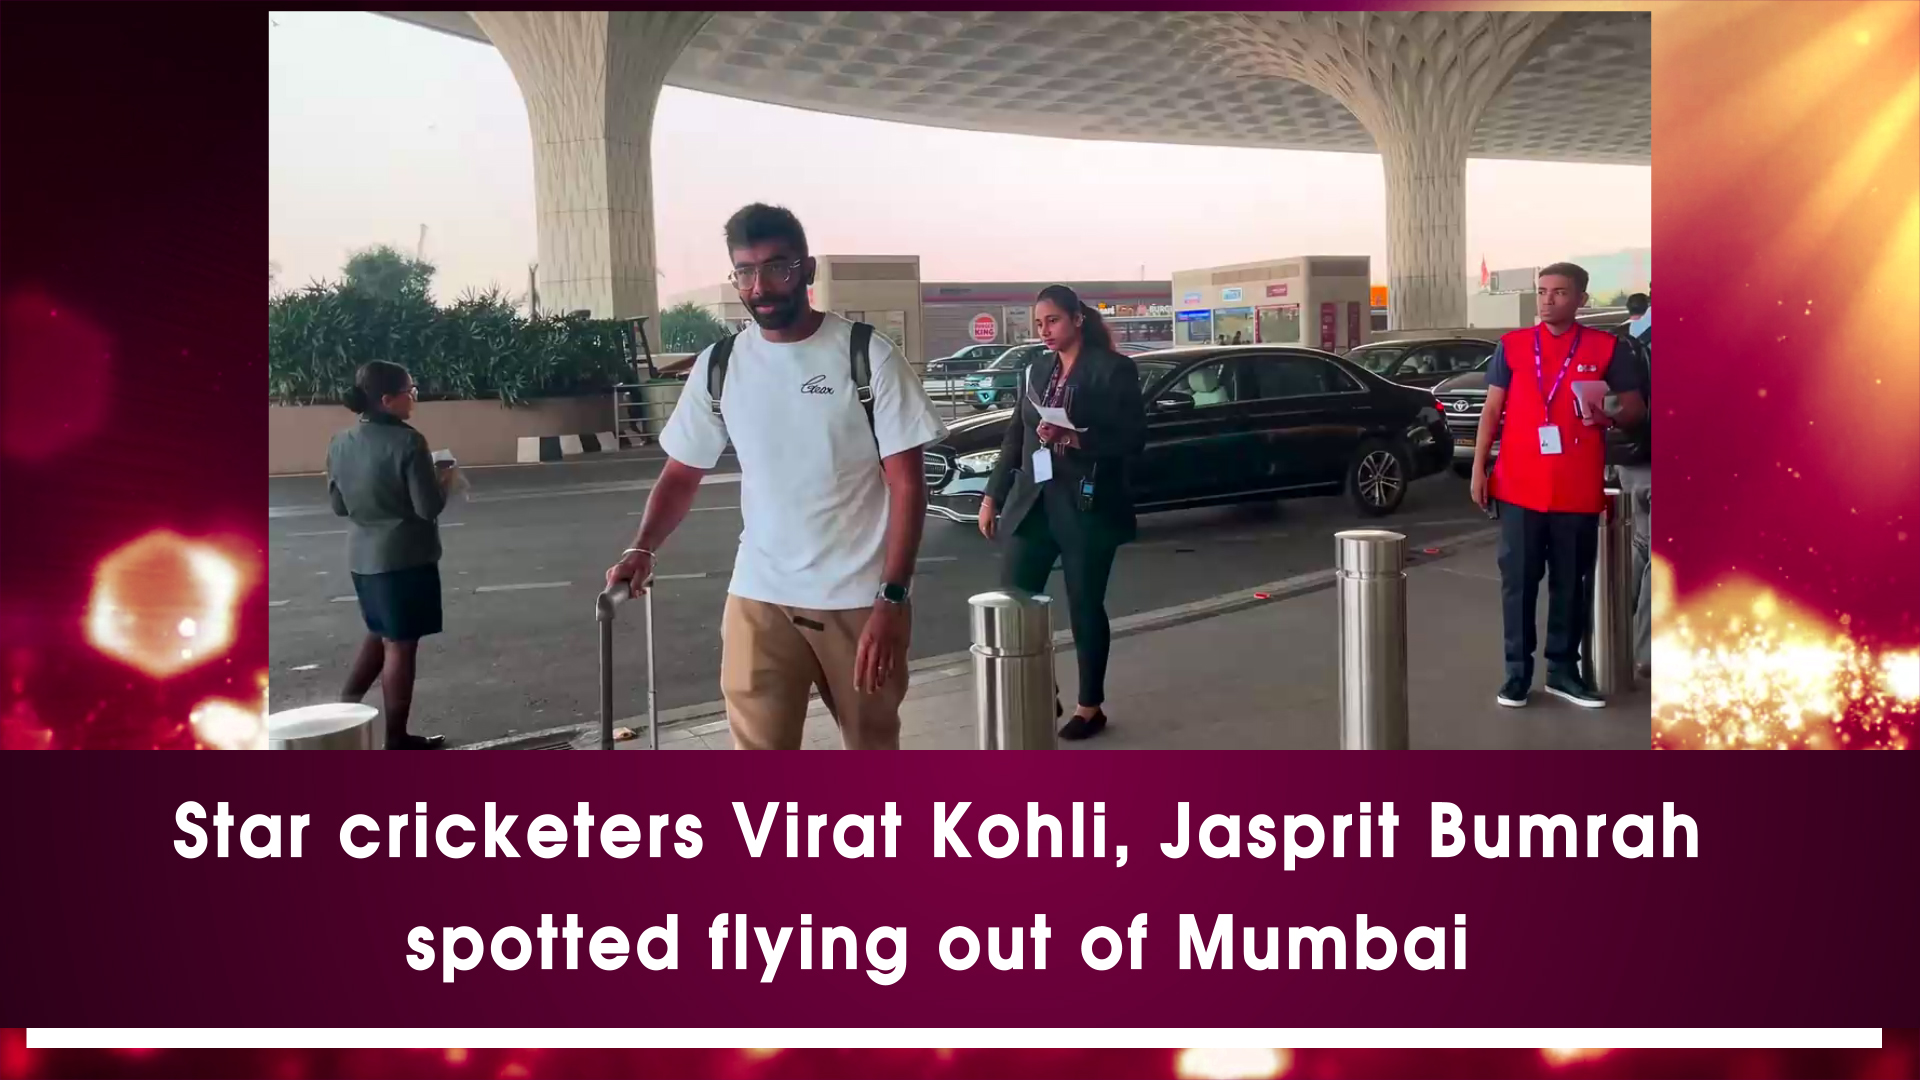 Star cricketers Virat Kohli, Jasprit Bumrah spotted flying out of Mumbai